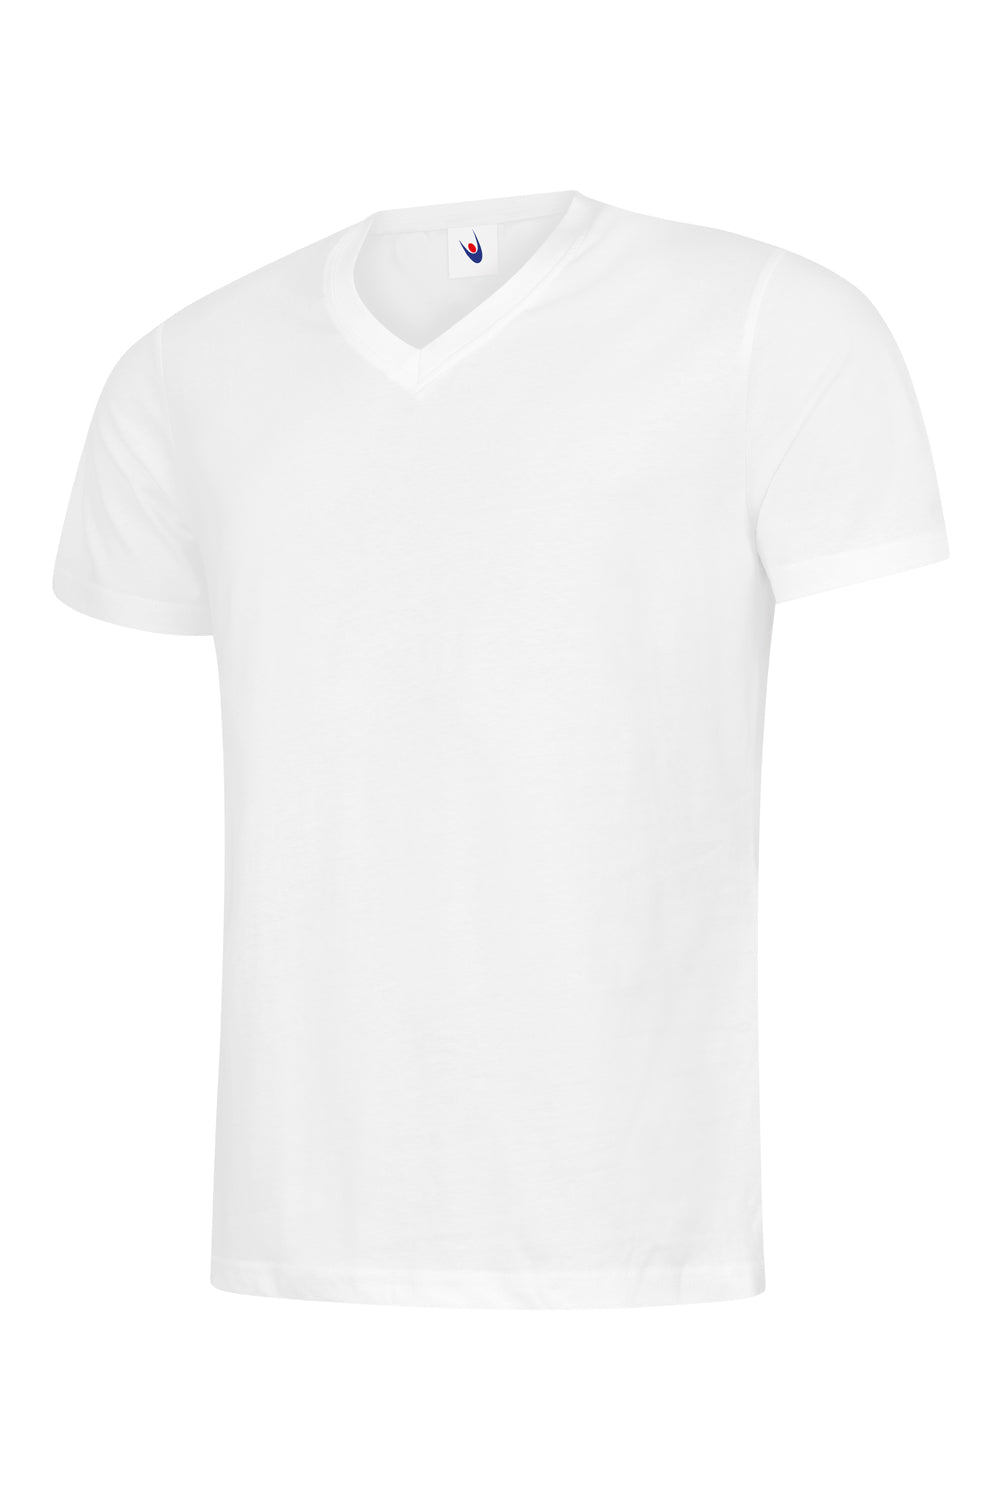 Uneek Classic V Neck T-shirt UC317 - White